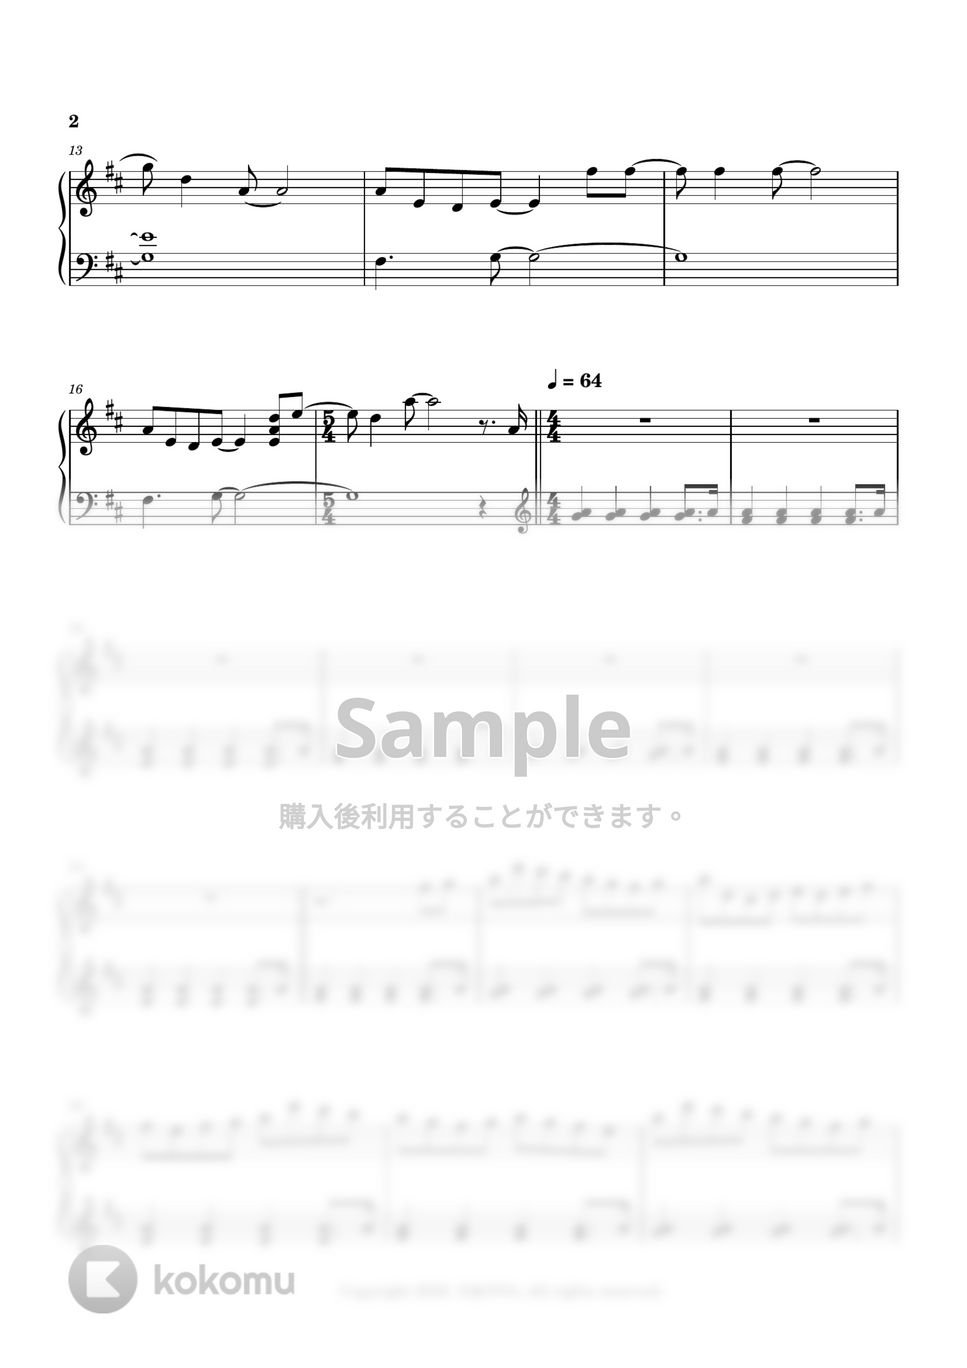 Seiji Kameda - 手続き記憶 (今夜、世界からこの恋が消えても track 19) by 今日ピアノ(Oneul Piano)